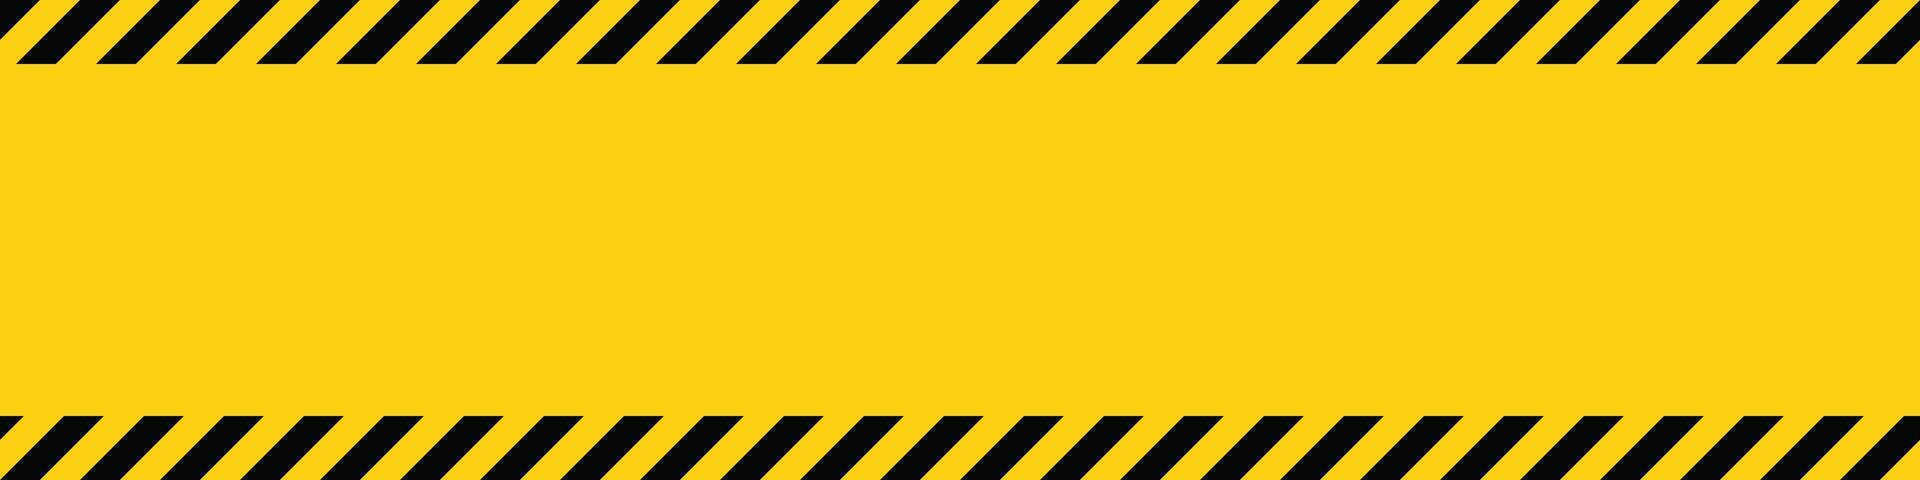 negro y amarillo precaución rayas cinta sin costura modelo textura antecedentes vector